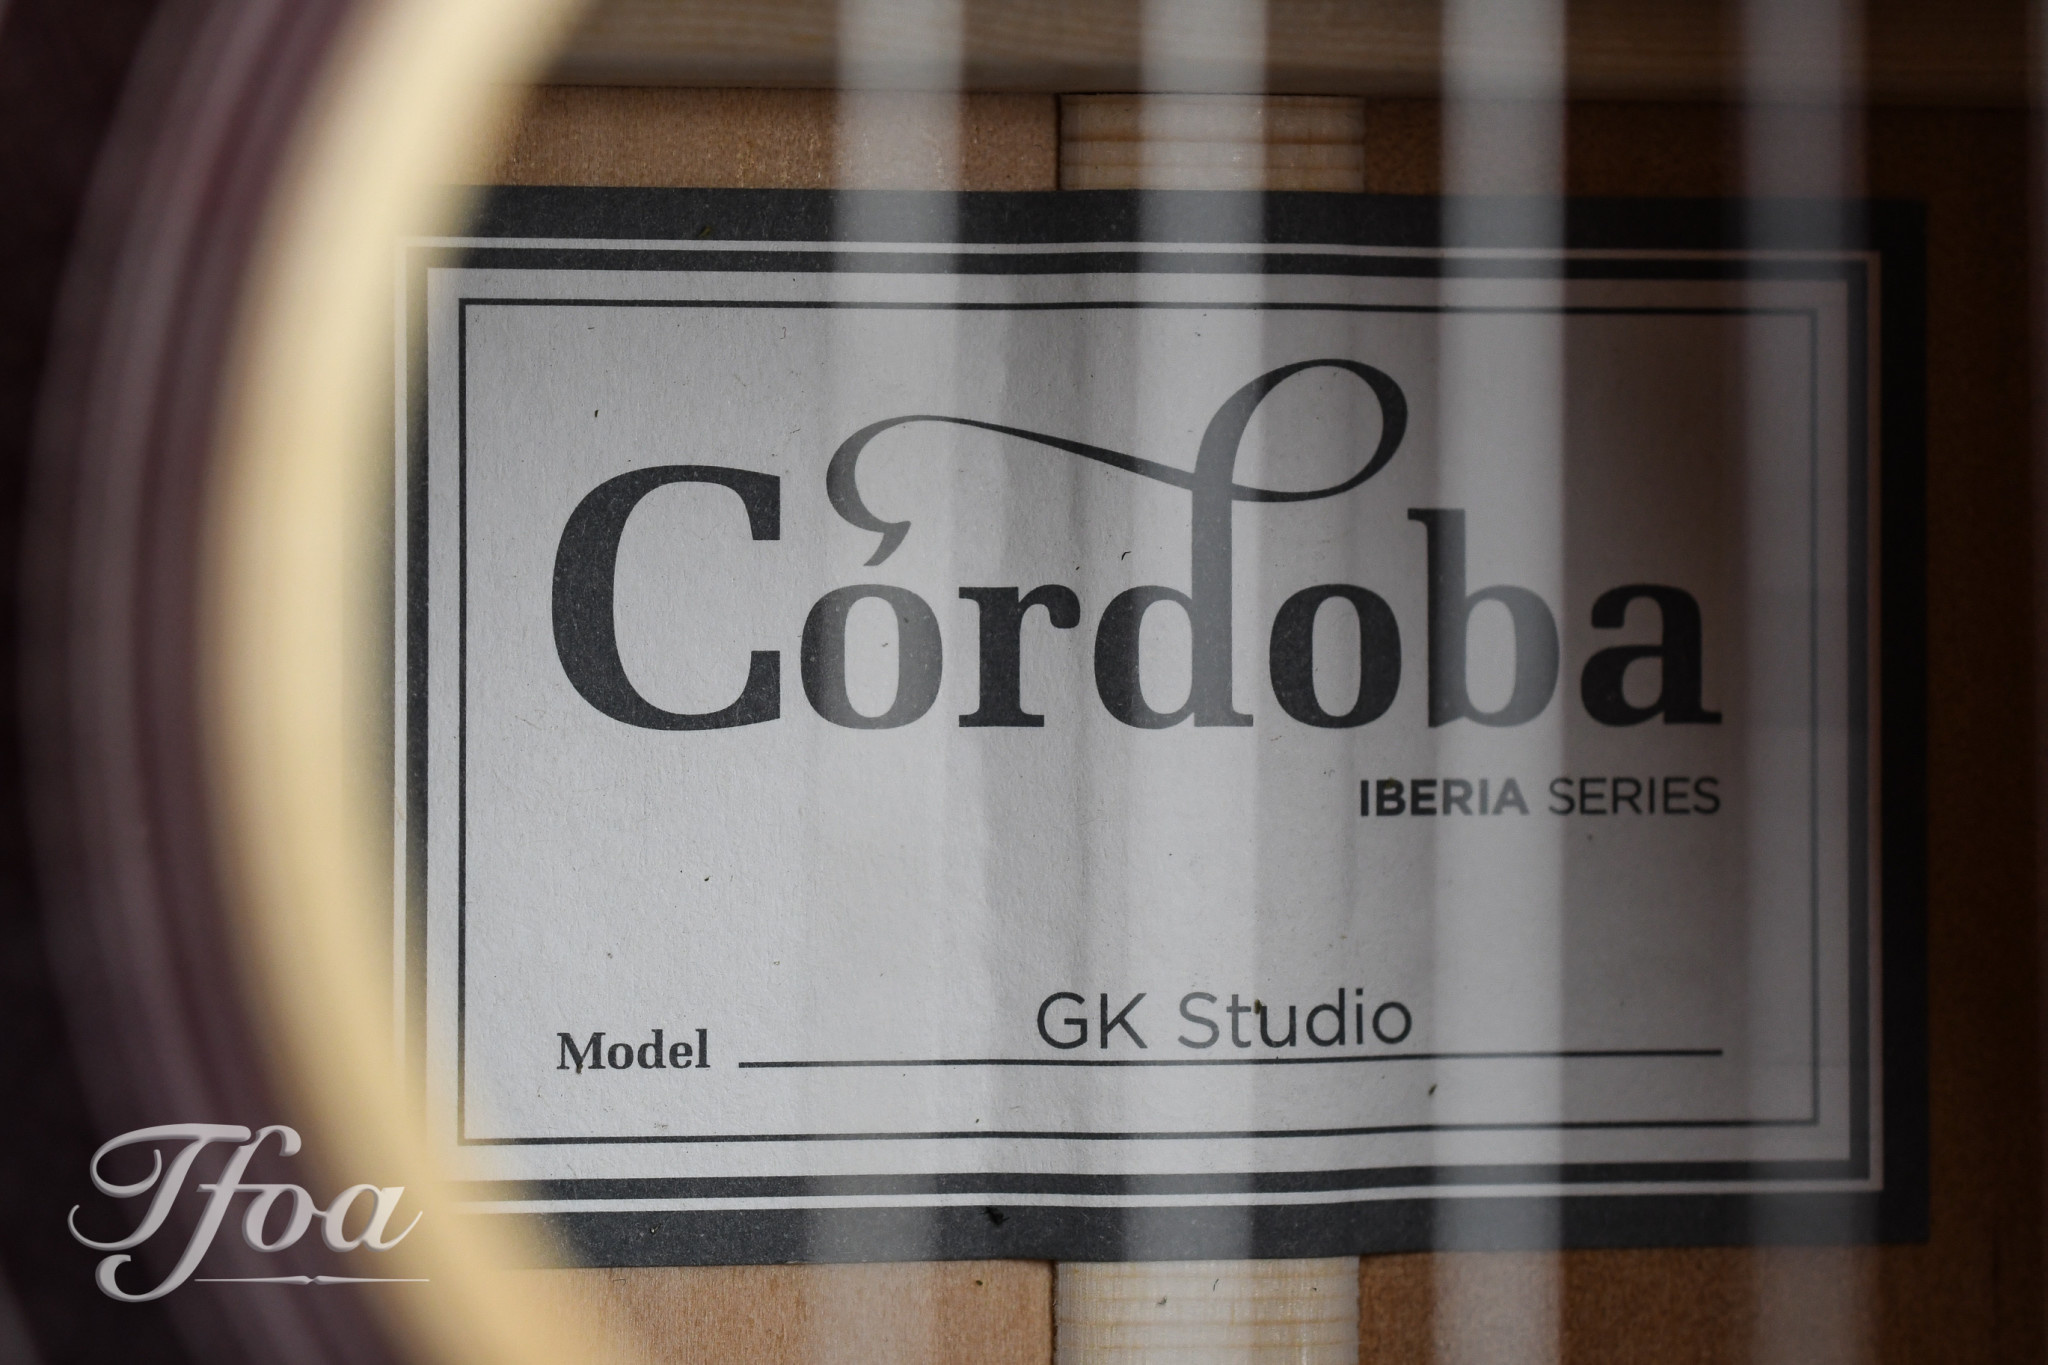 Cordoba GK Studio - The Fellowship of Acoustics